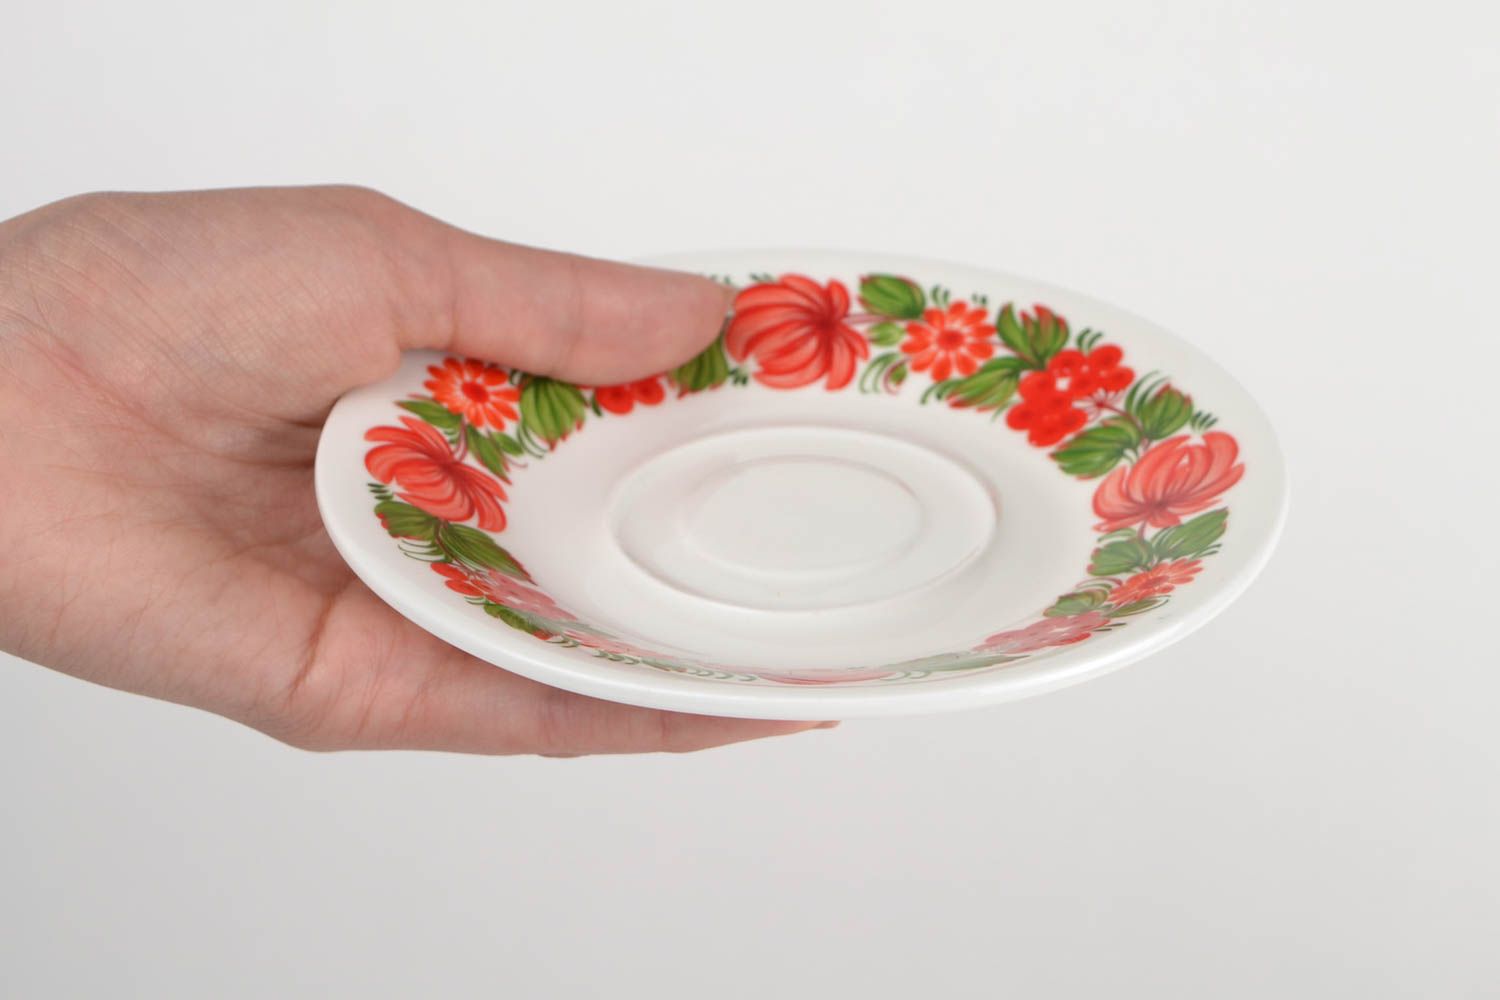 Handmade saucer porcelain saucer unusual dishes kitchen accessories decor ideas photo 2